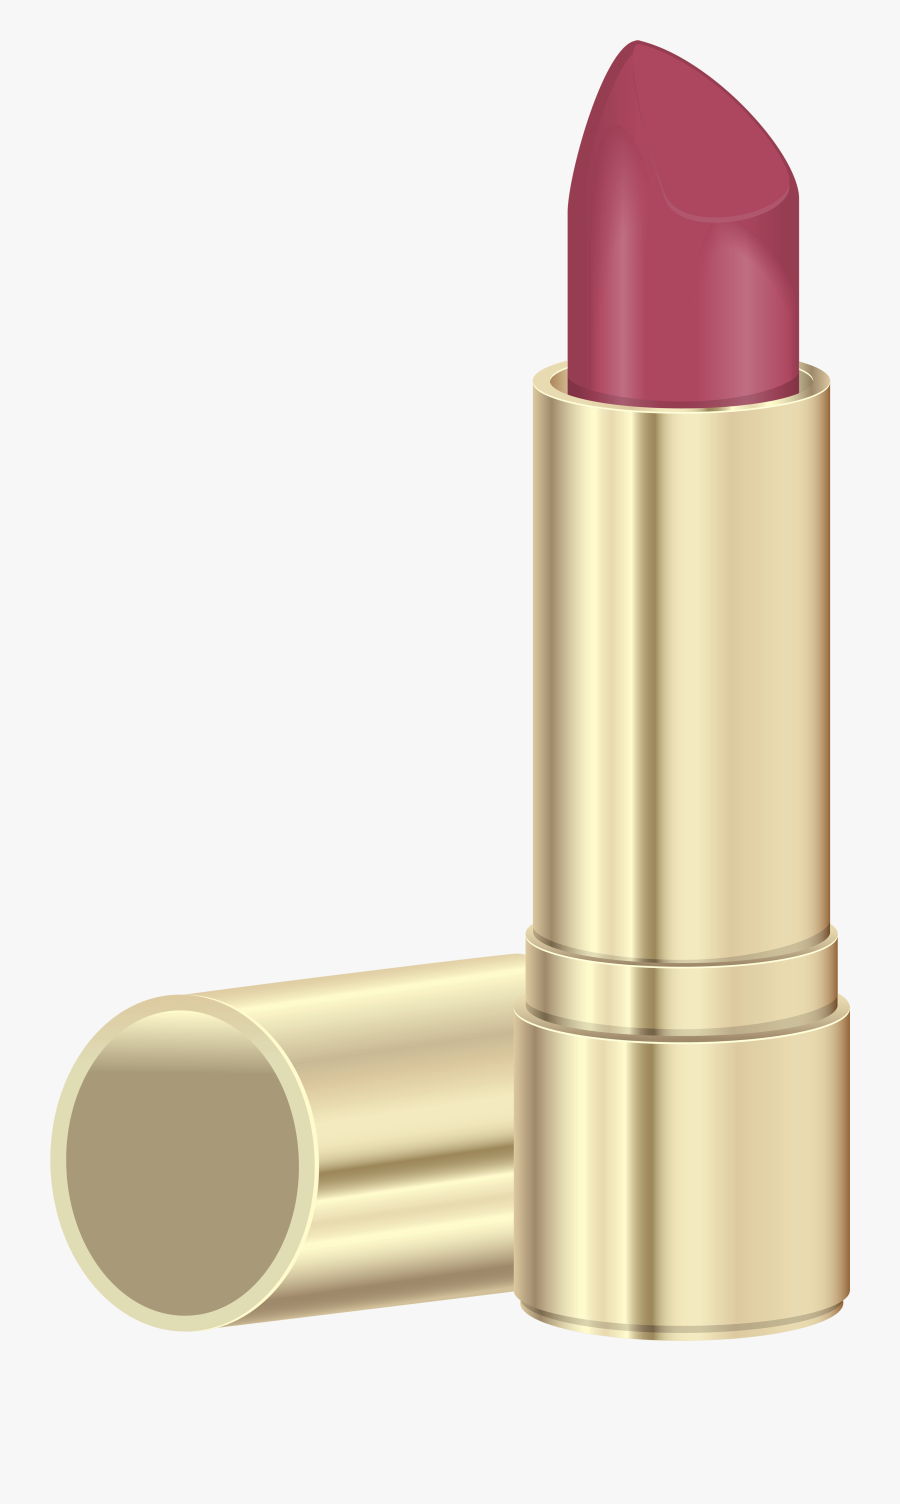 Lipstick Clipart Clear Background - Clip Art Lipstick, Transparent Clipart